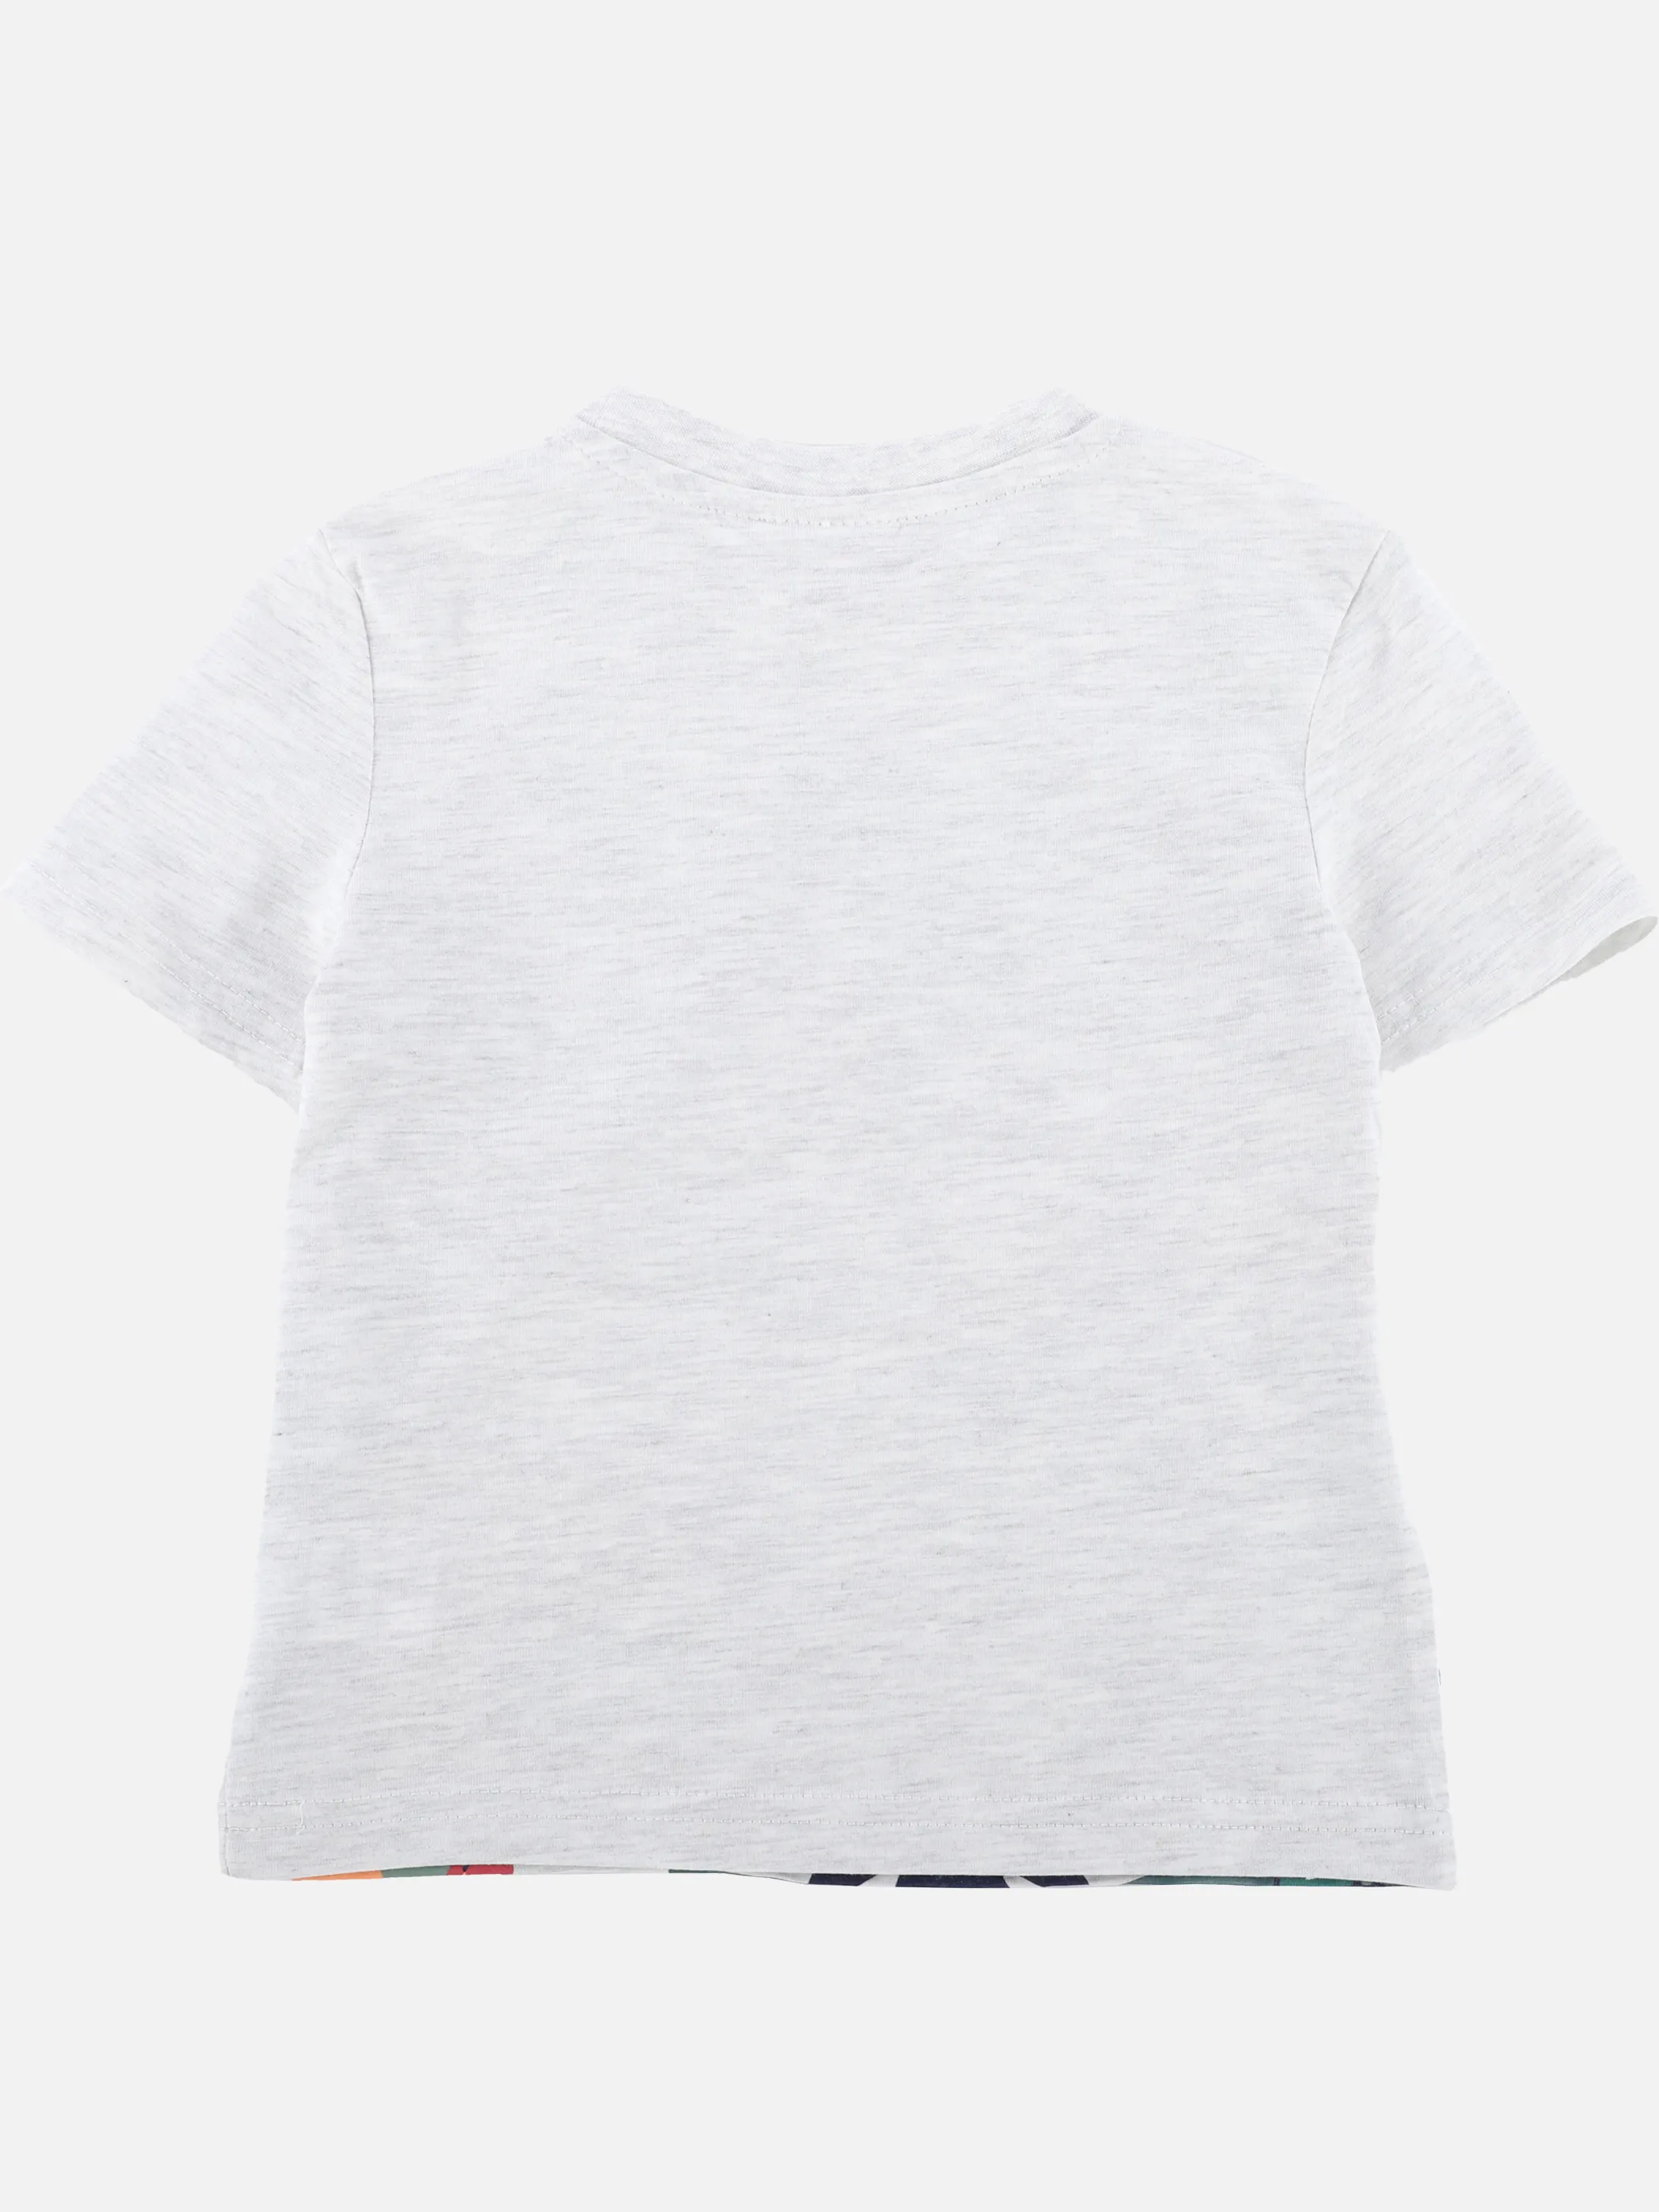 Stop + Go KJ T-Shirt mit Frontdruck in grau melange Silber 890049 HELLGRAU 2